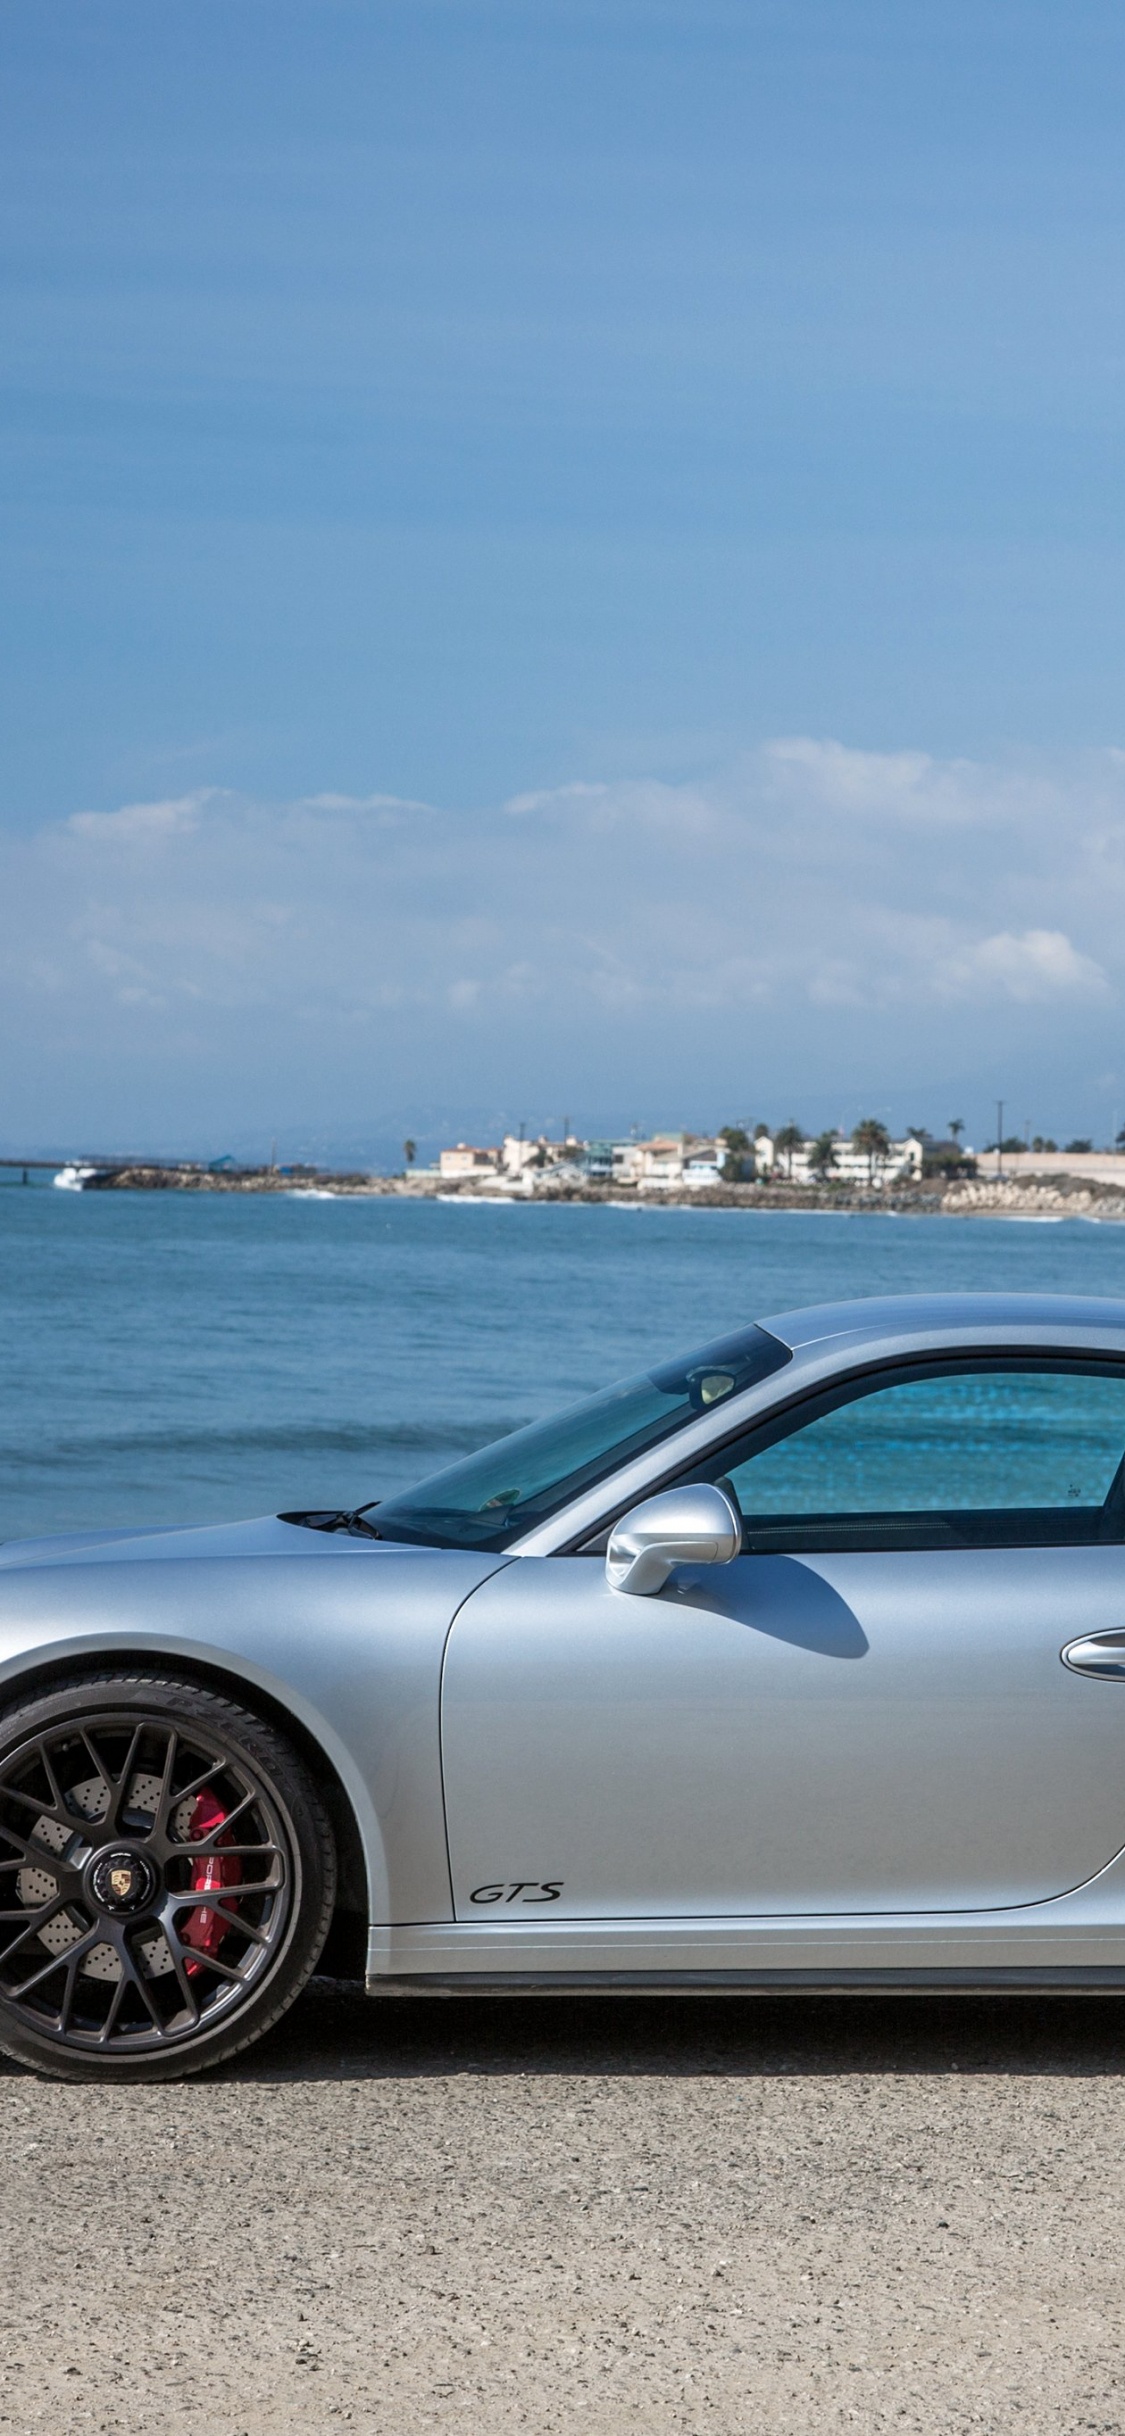 Silver Porsche 911 Parked on Seashore During Daytime. Wallpaper in 1125x2436 Resolution